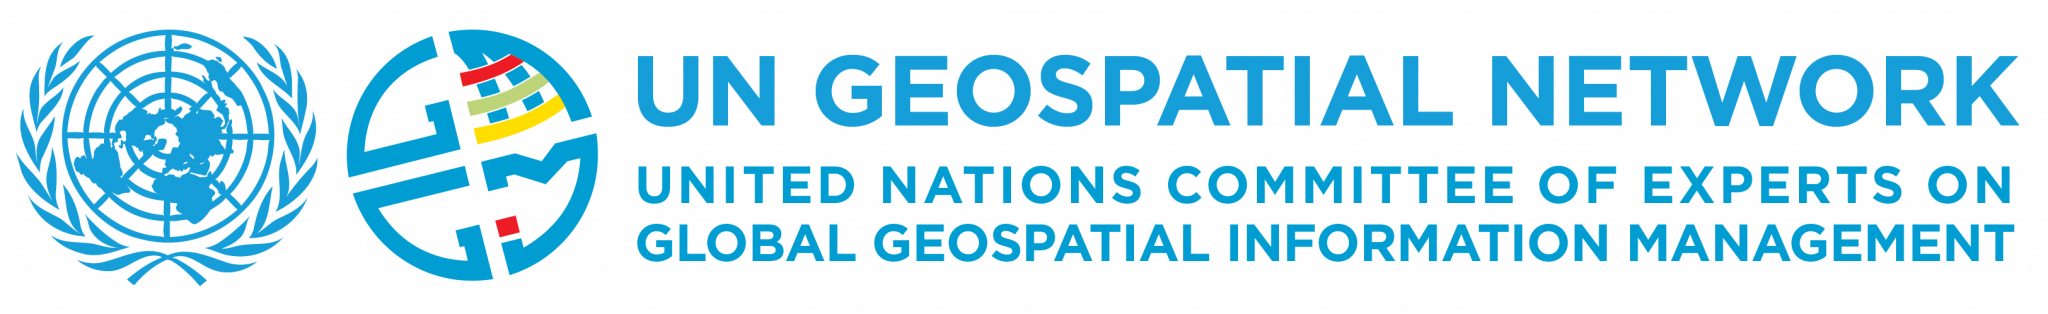 UN Geospatial Network